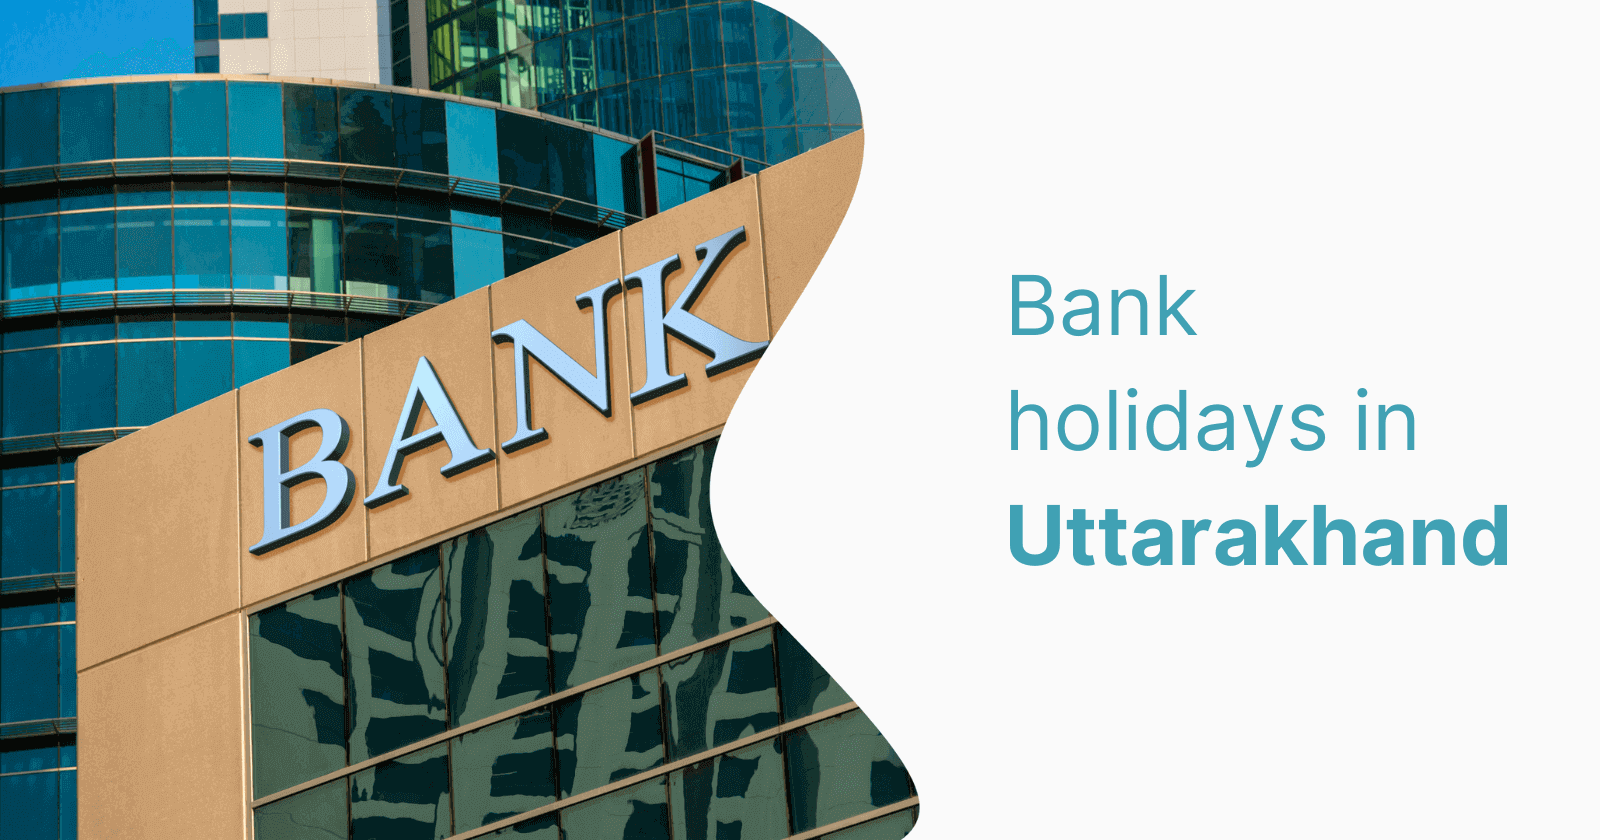 Uttarakhand Holidays: List of Bank Holidays in Uttarakhand in 2023